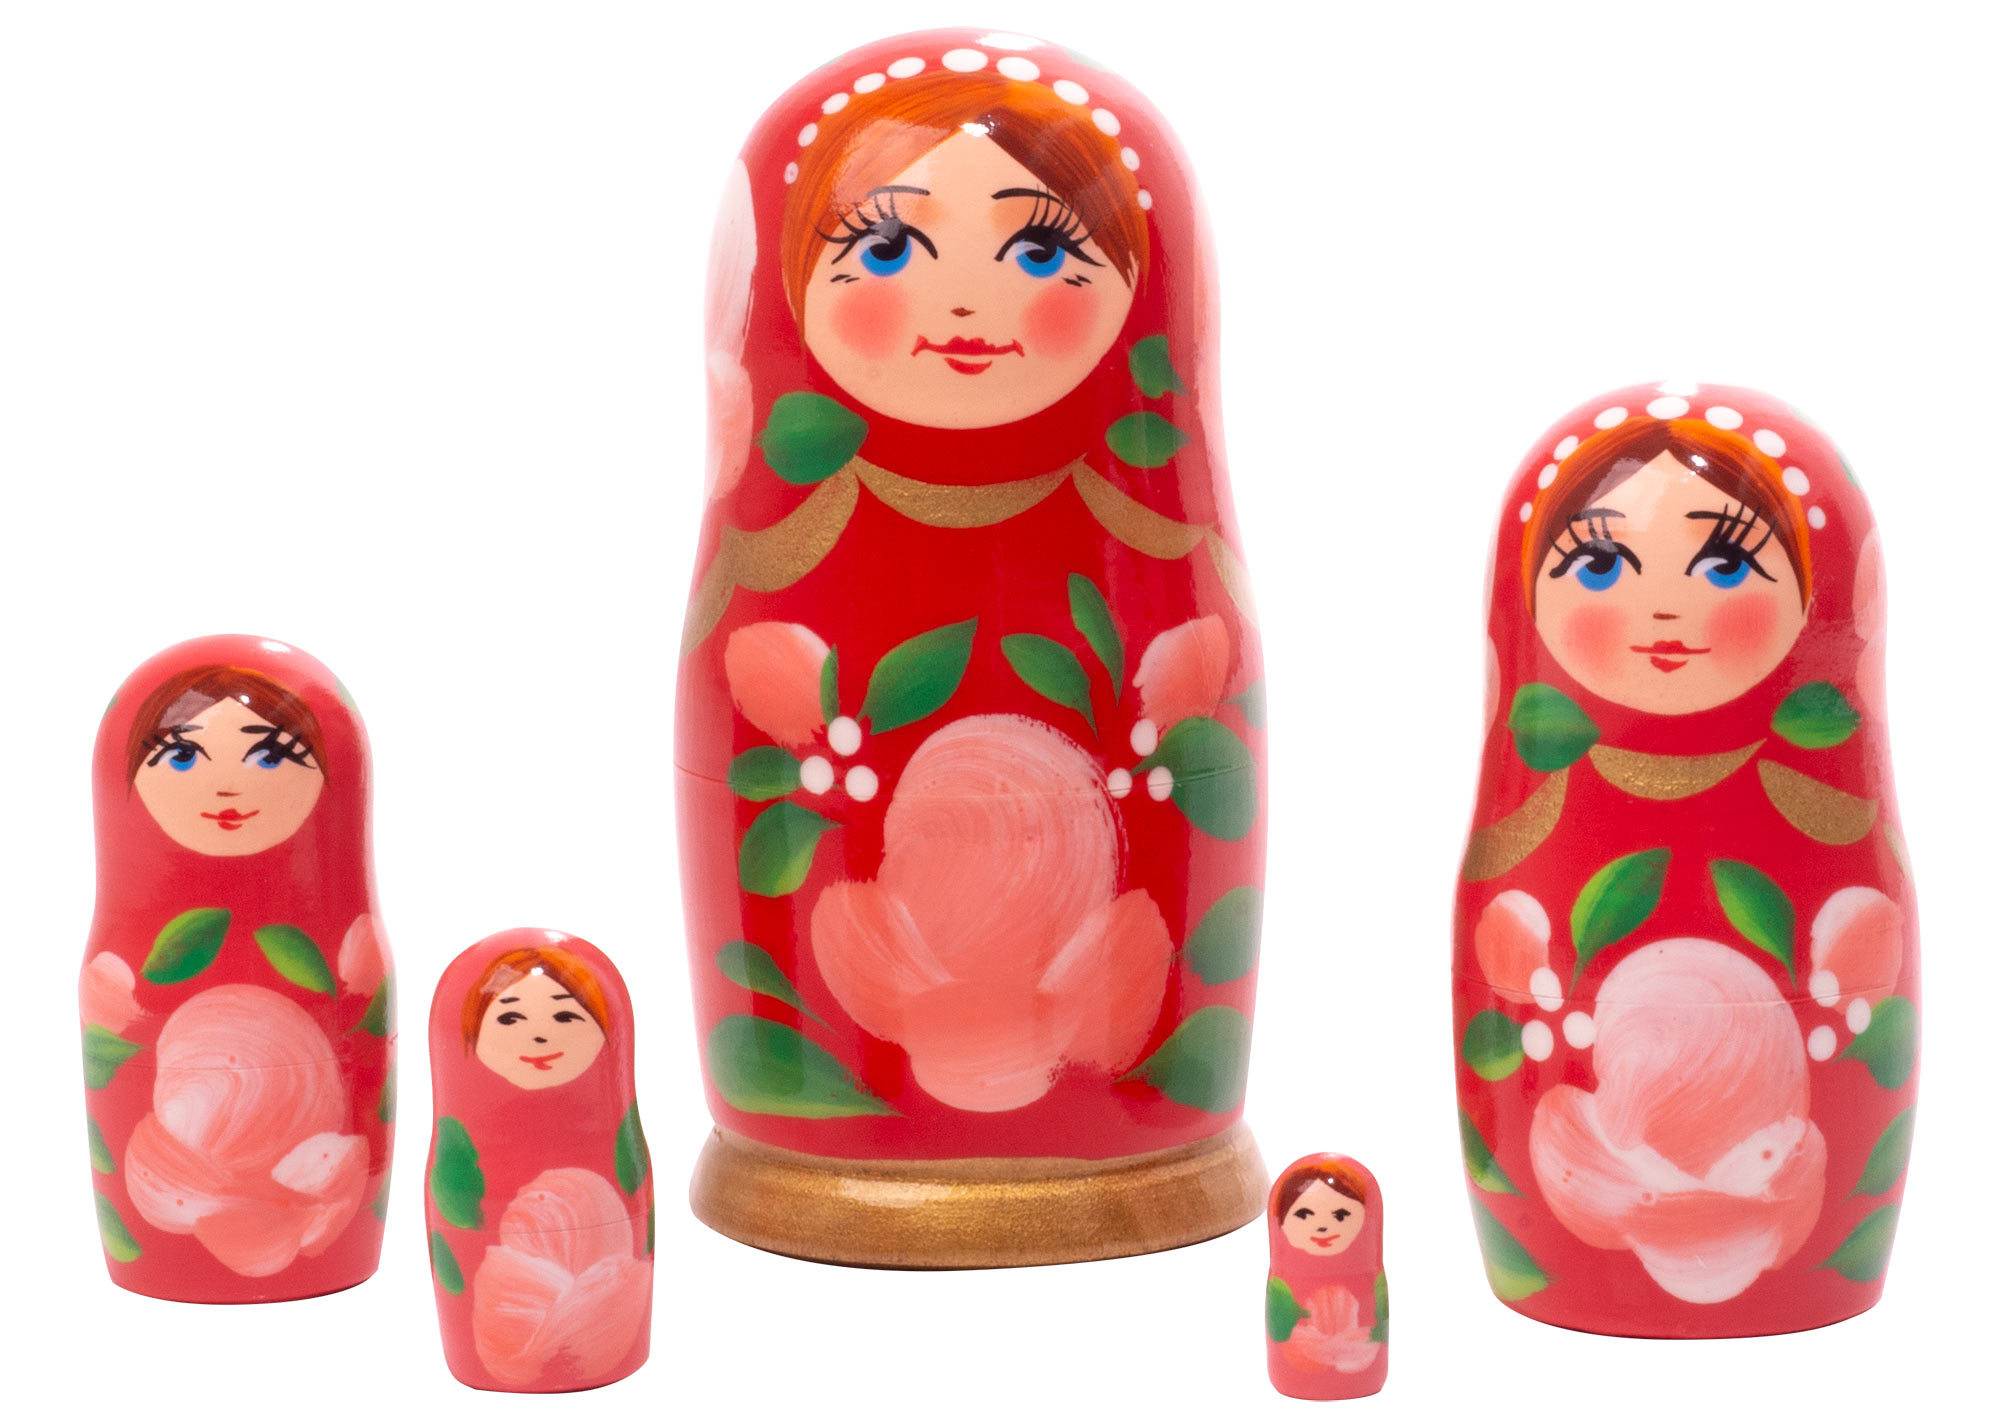 Buy Red Gradient Nesting Doll 5pc./4" – Russian Doll Inside A Doll at GoldenCockerel.com